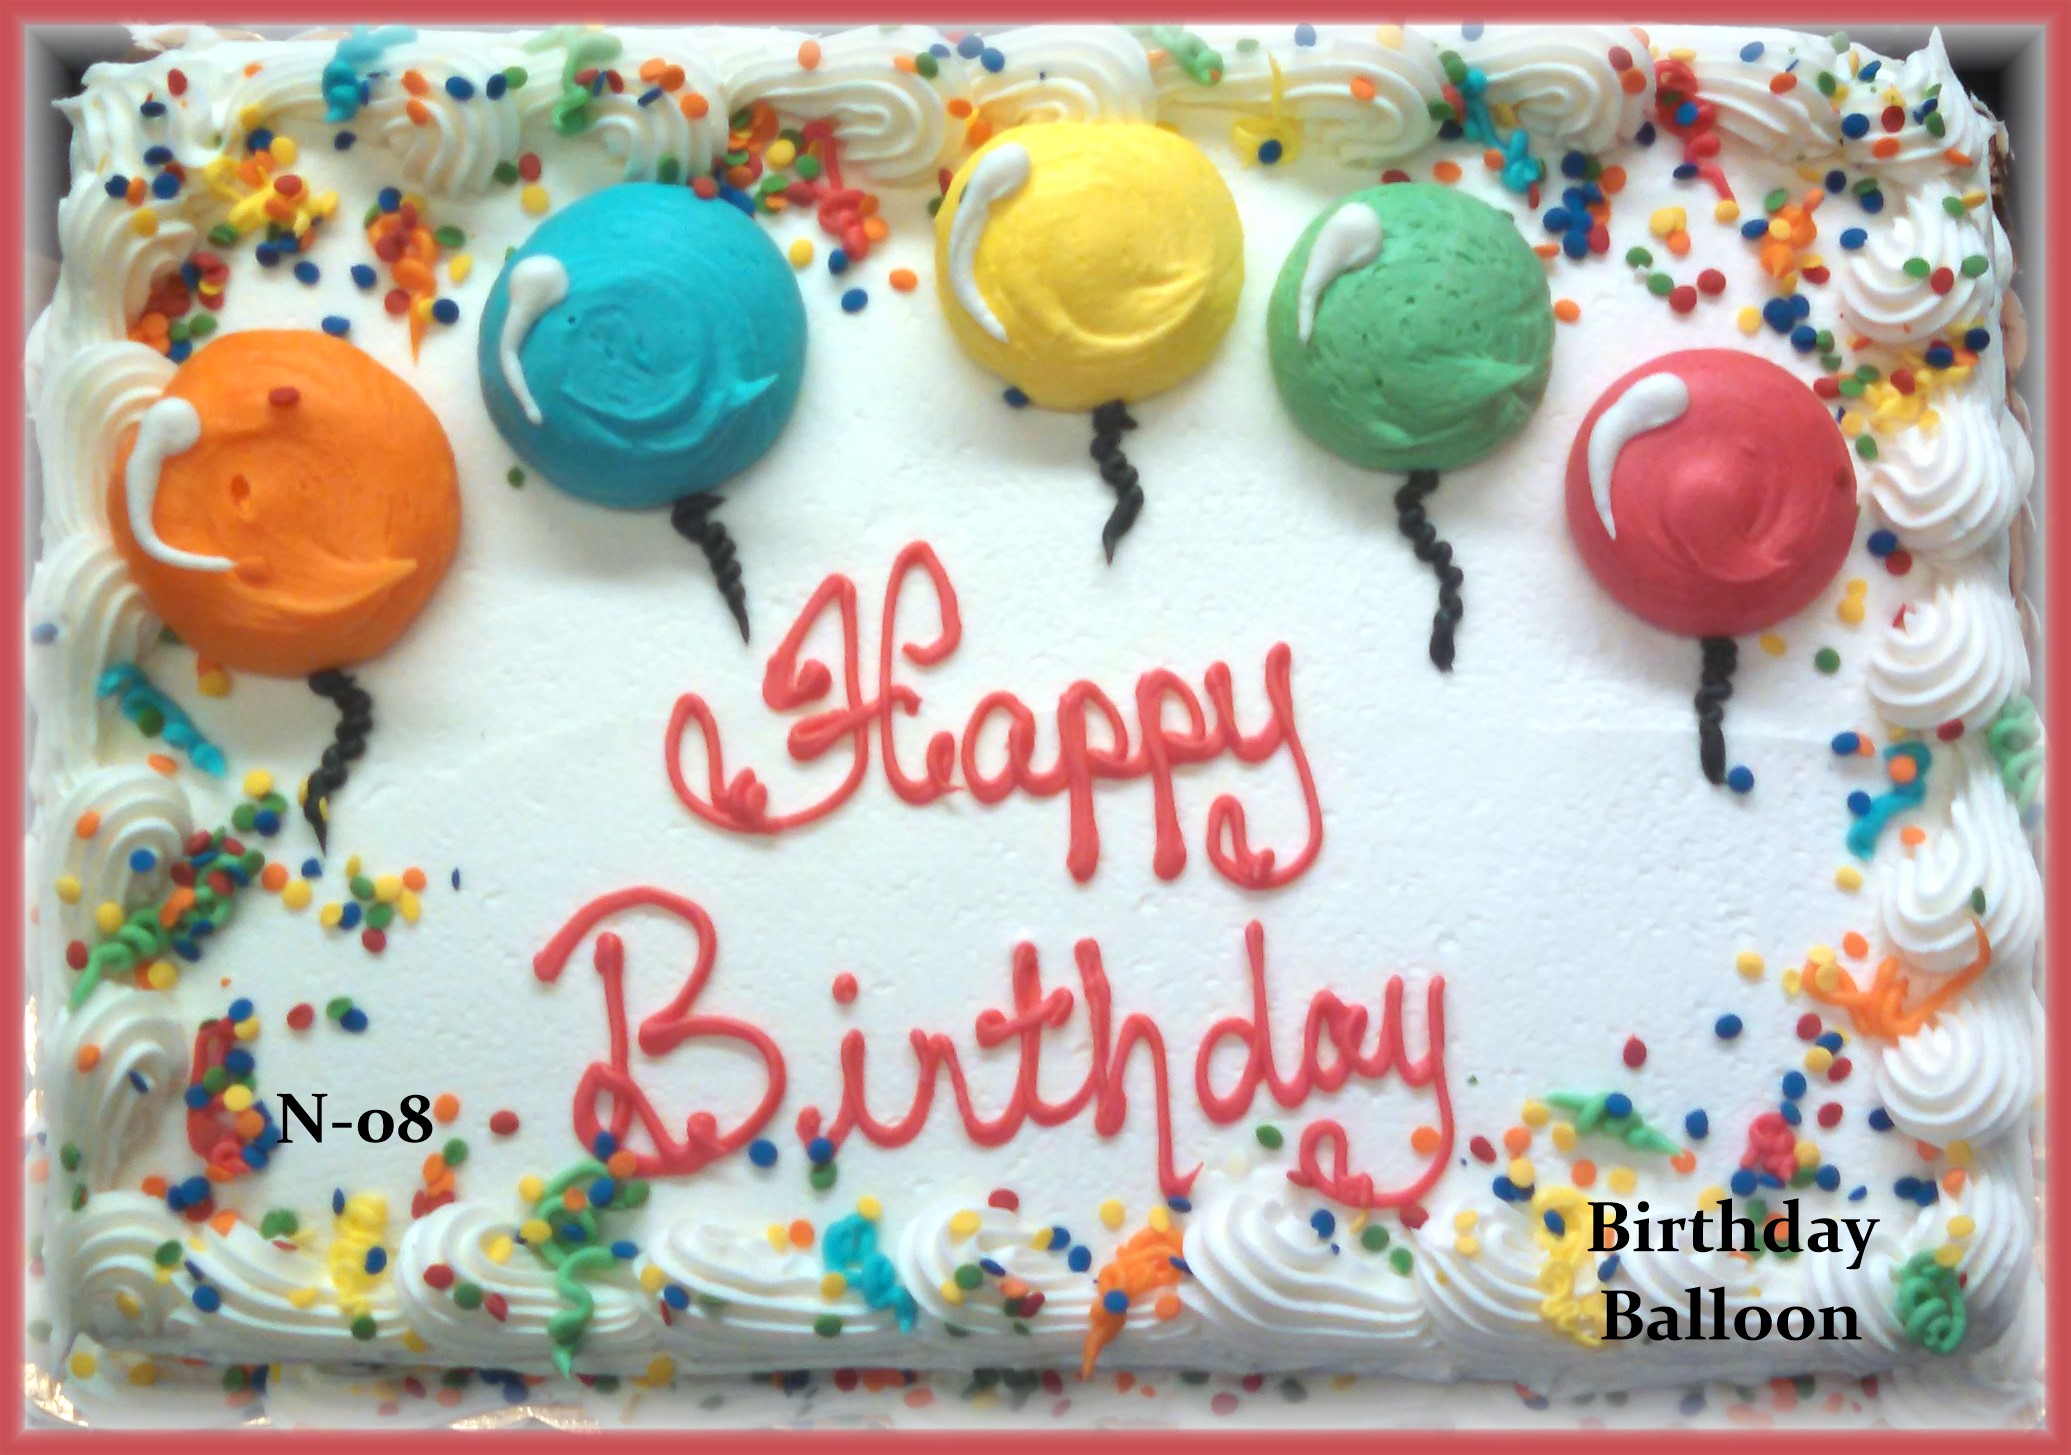 N-08 Birthday Balloon